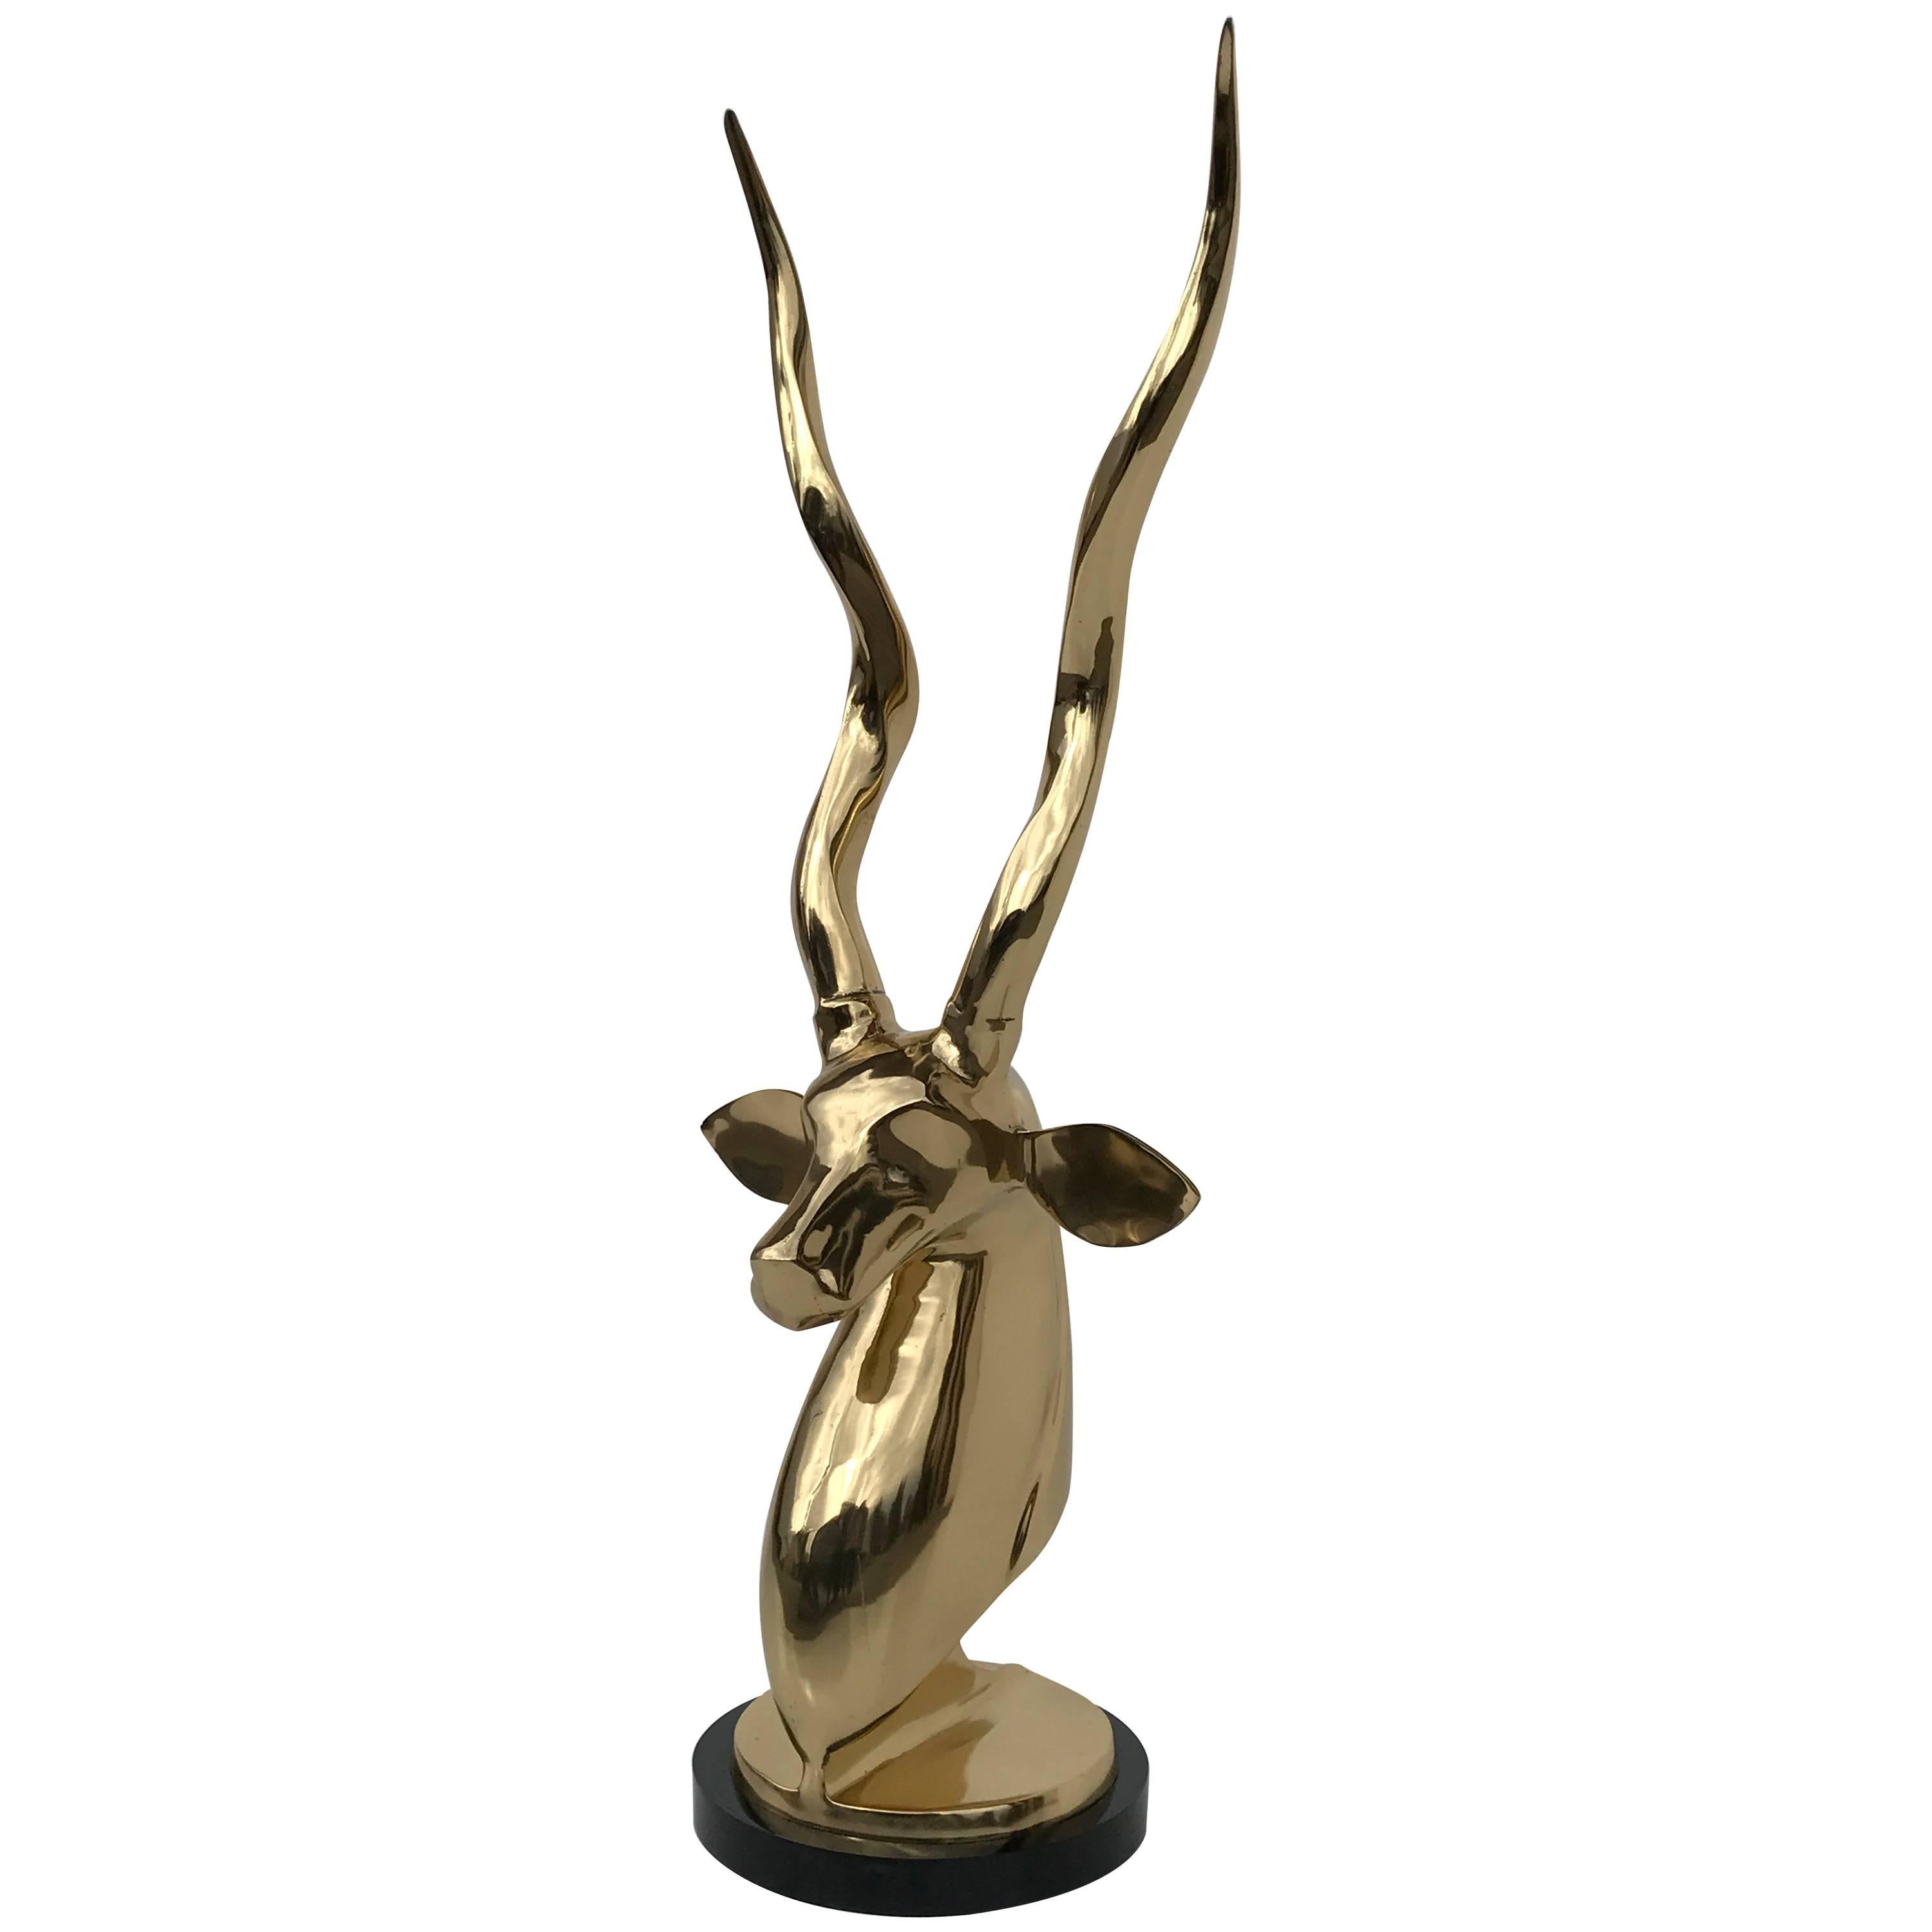 Polished Brass Kudu or Impala Sculpture Bust on Black Lucite Base